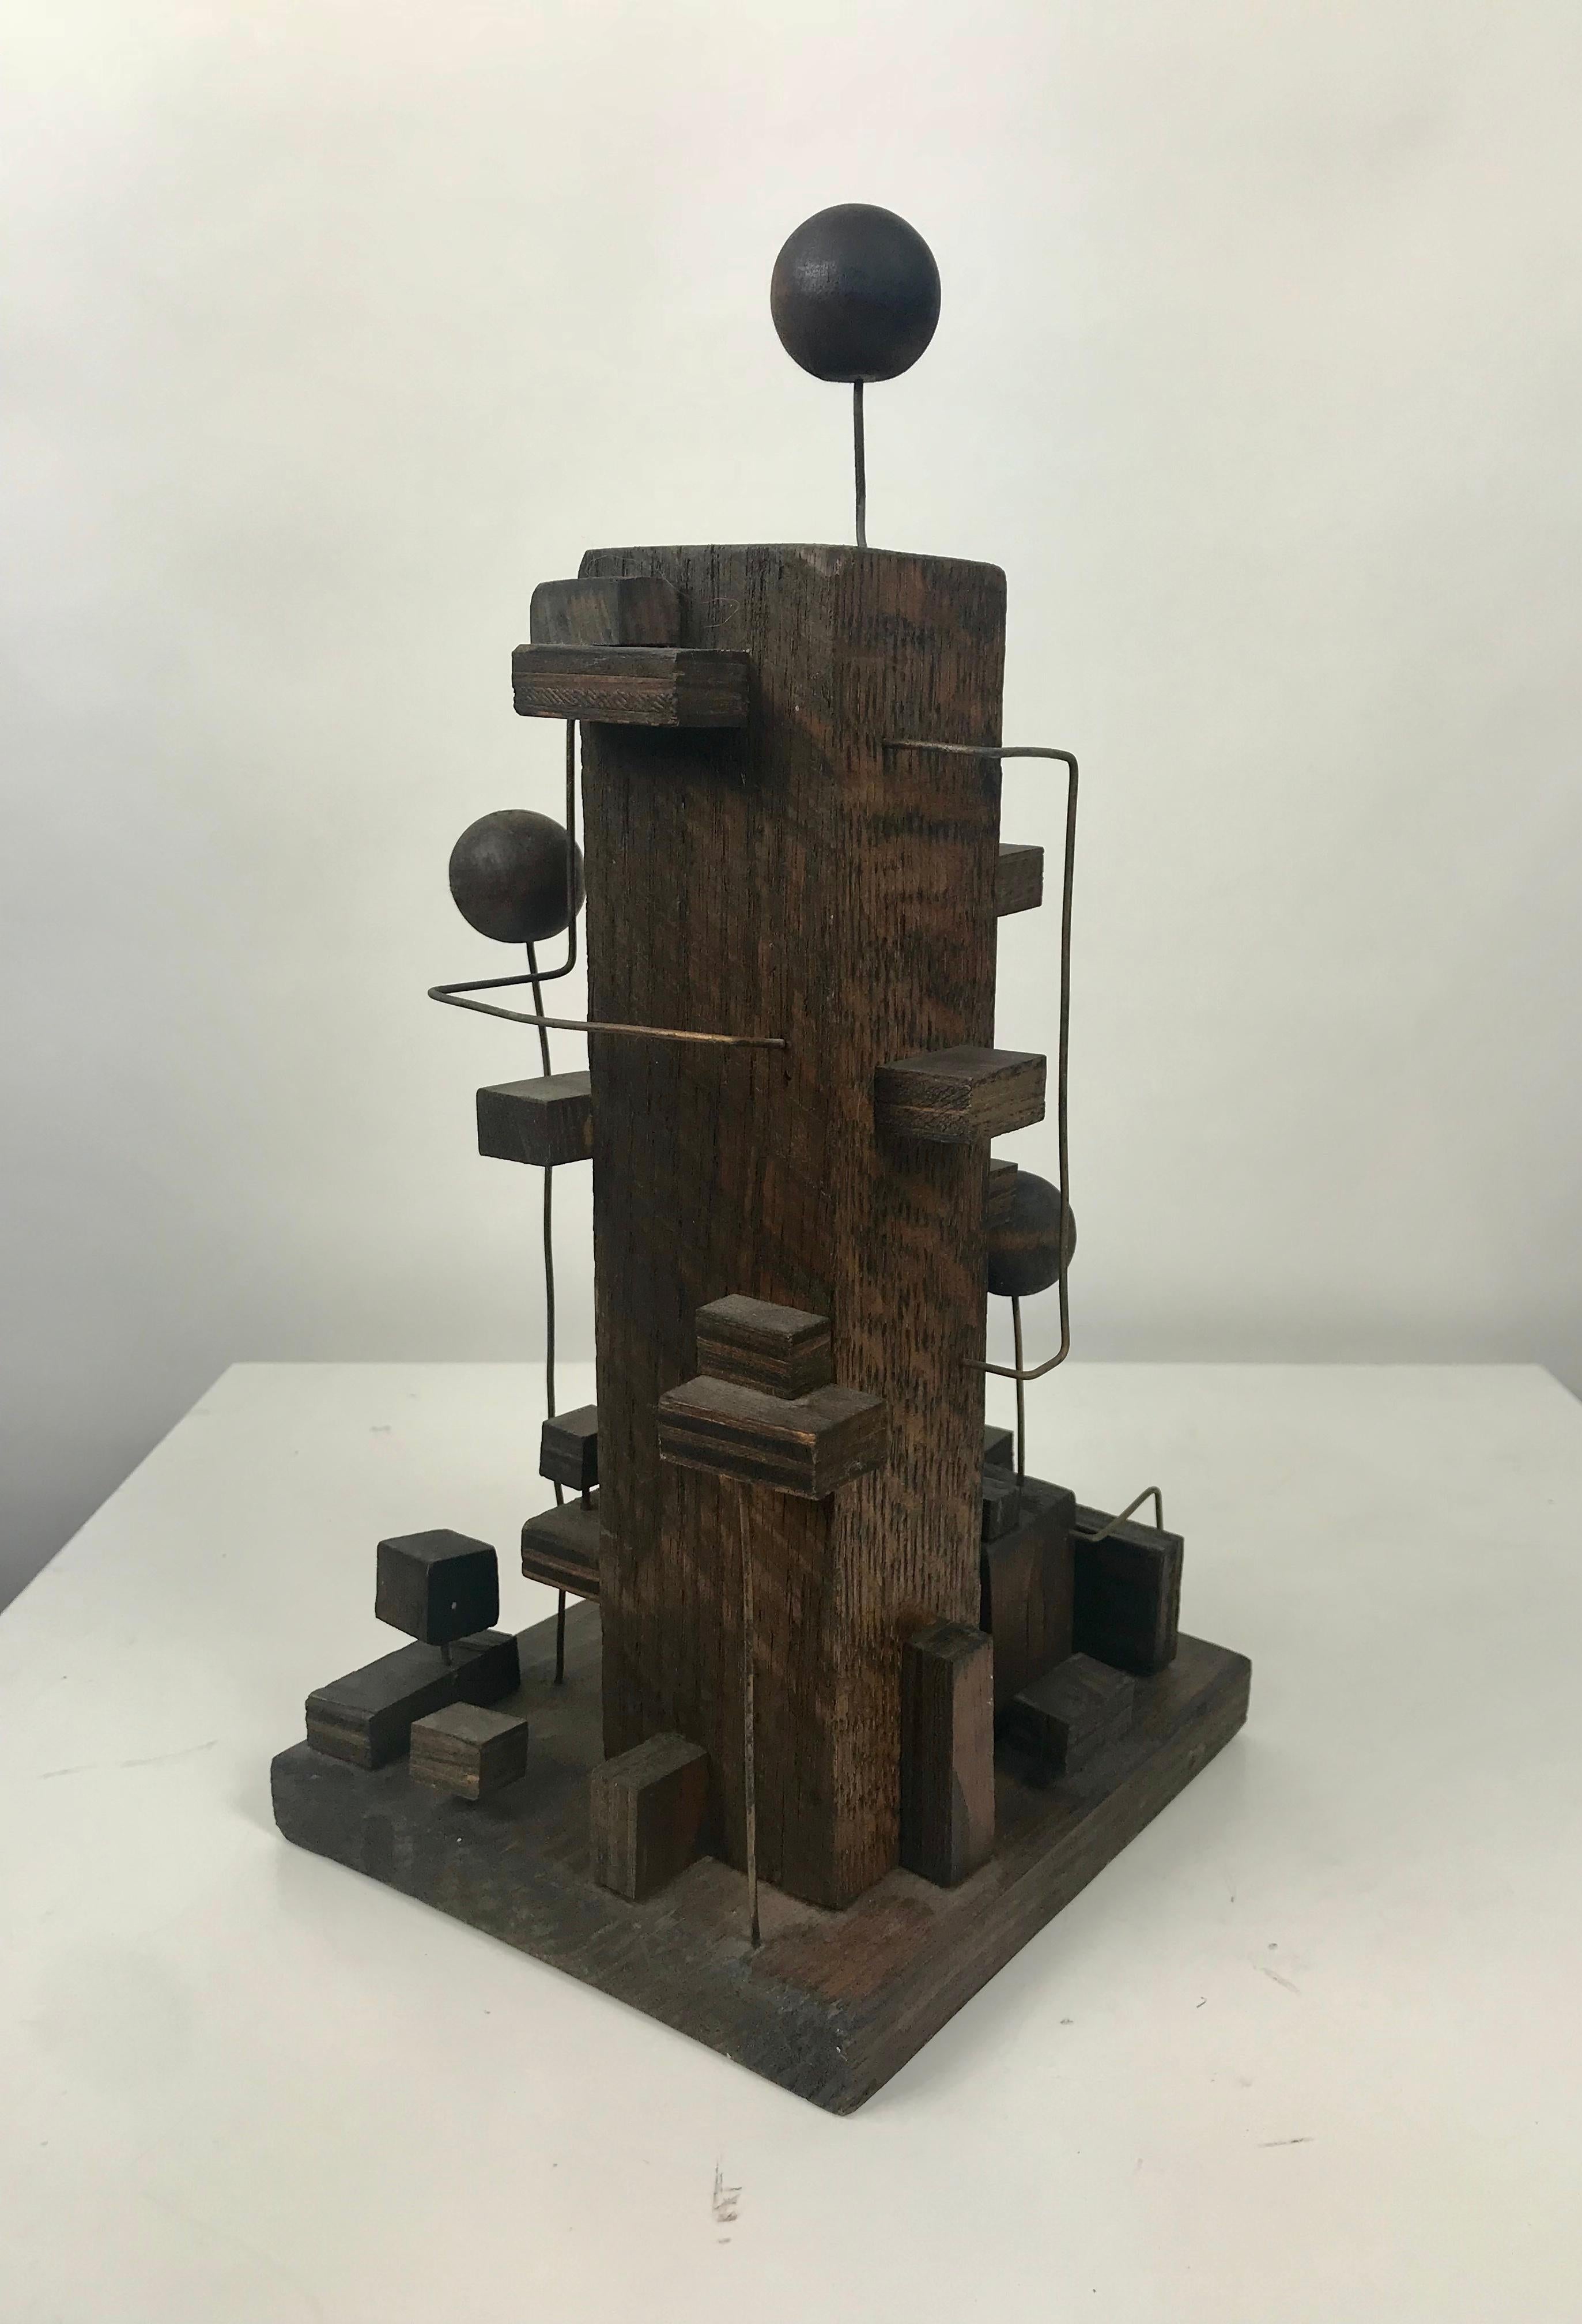 20th Century American Modern Constructivist Sculpture Wood and Metal, Folk Art